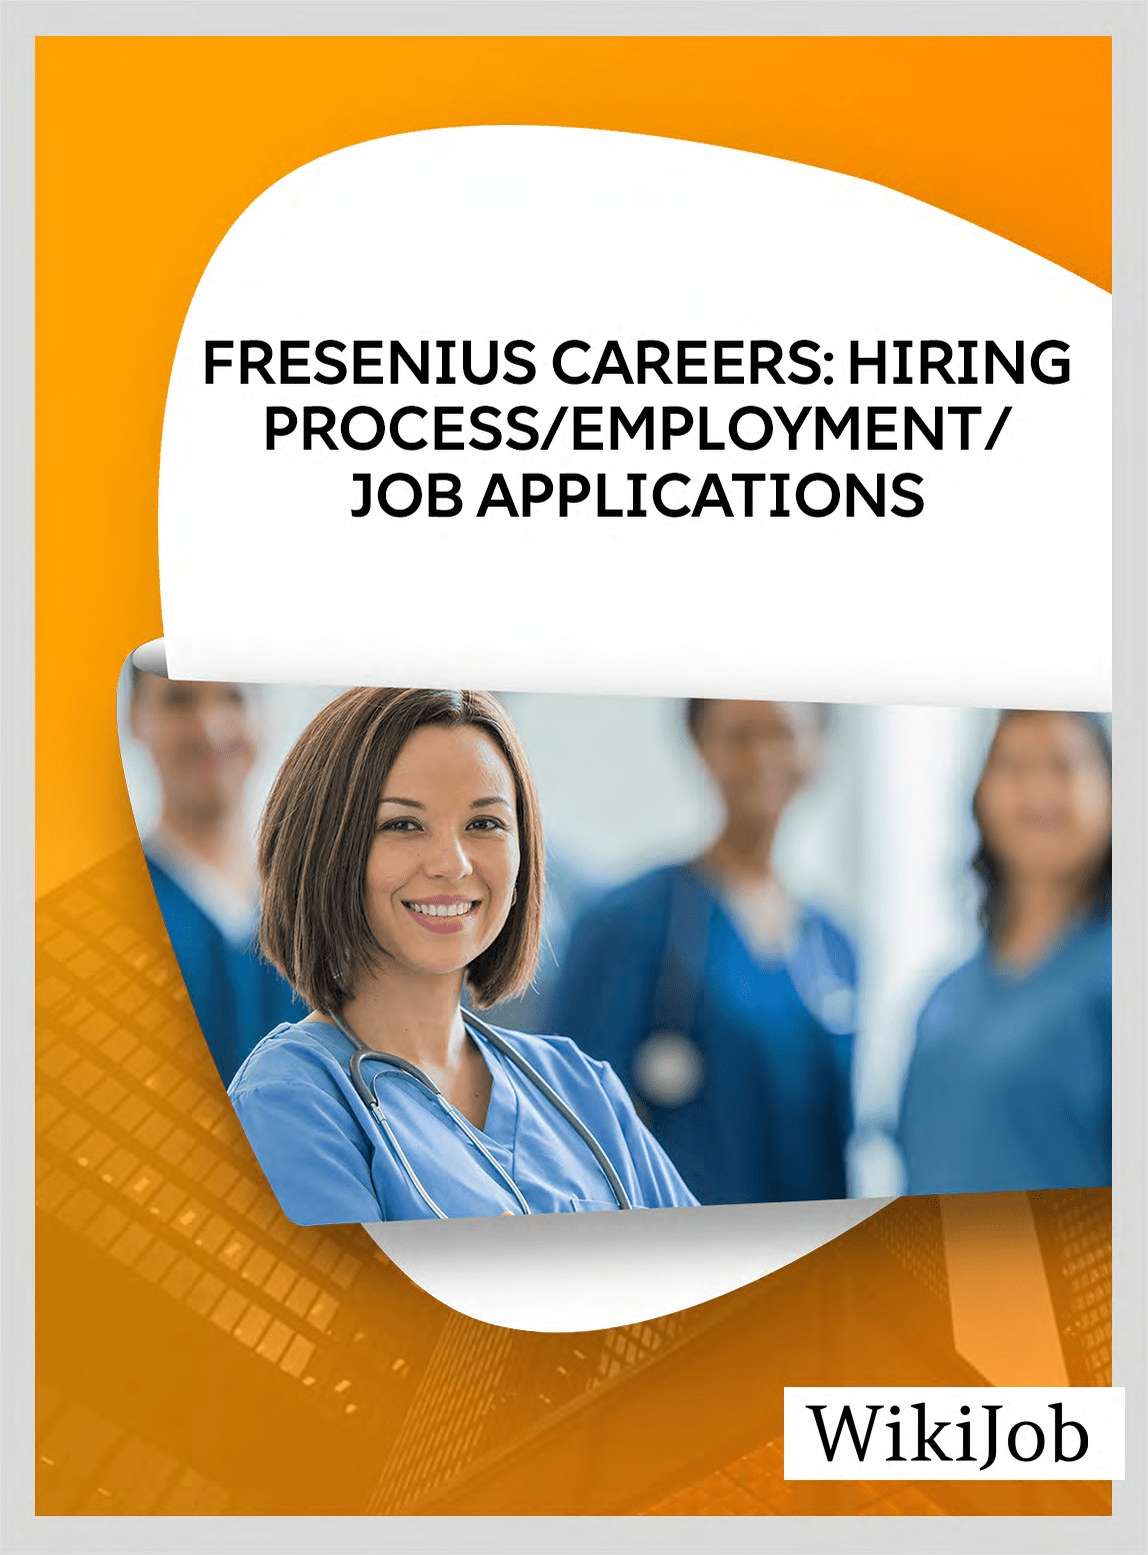 Fresenius Careers: Hiring Process/Employment/Job Applications